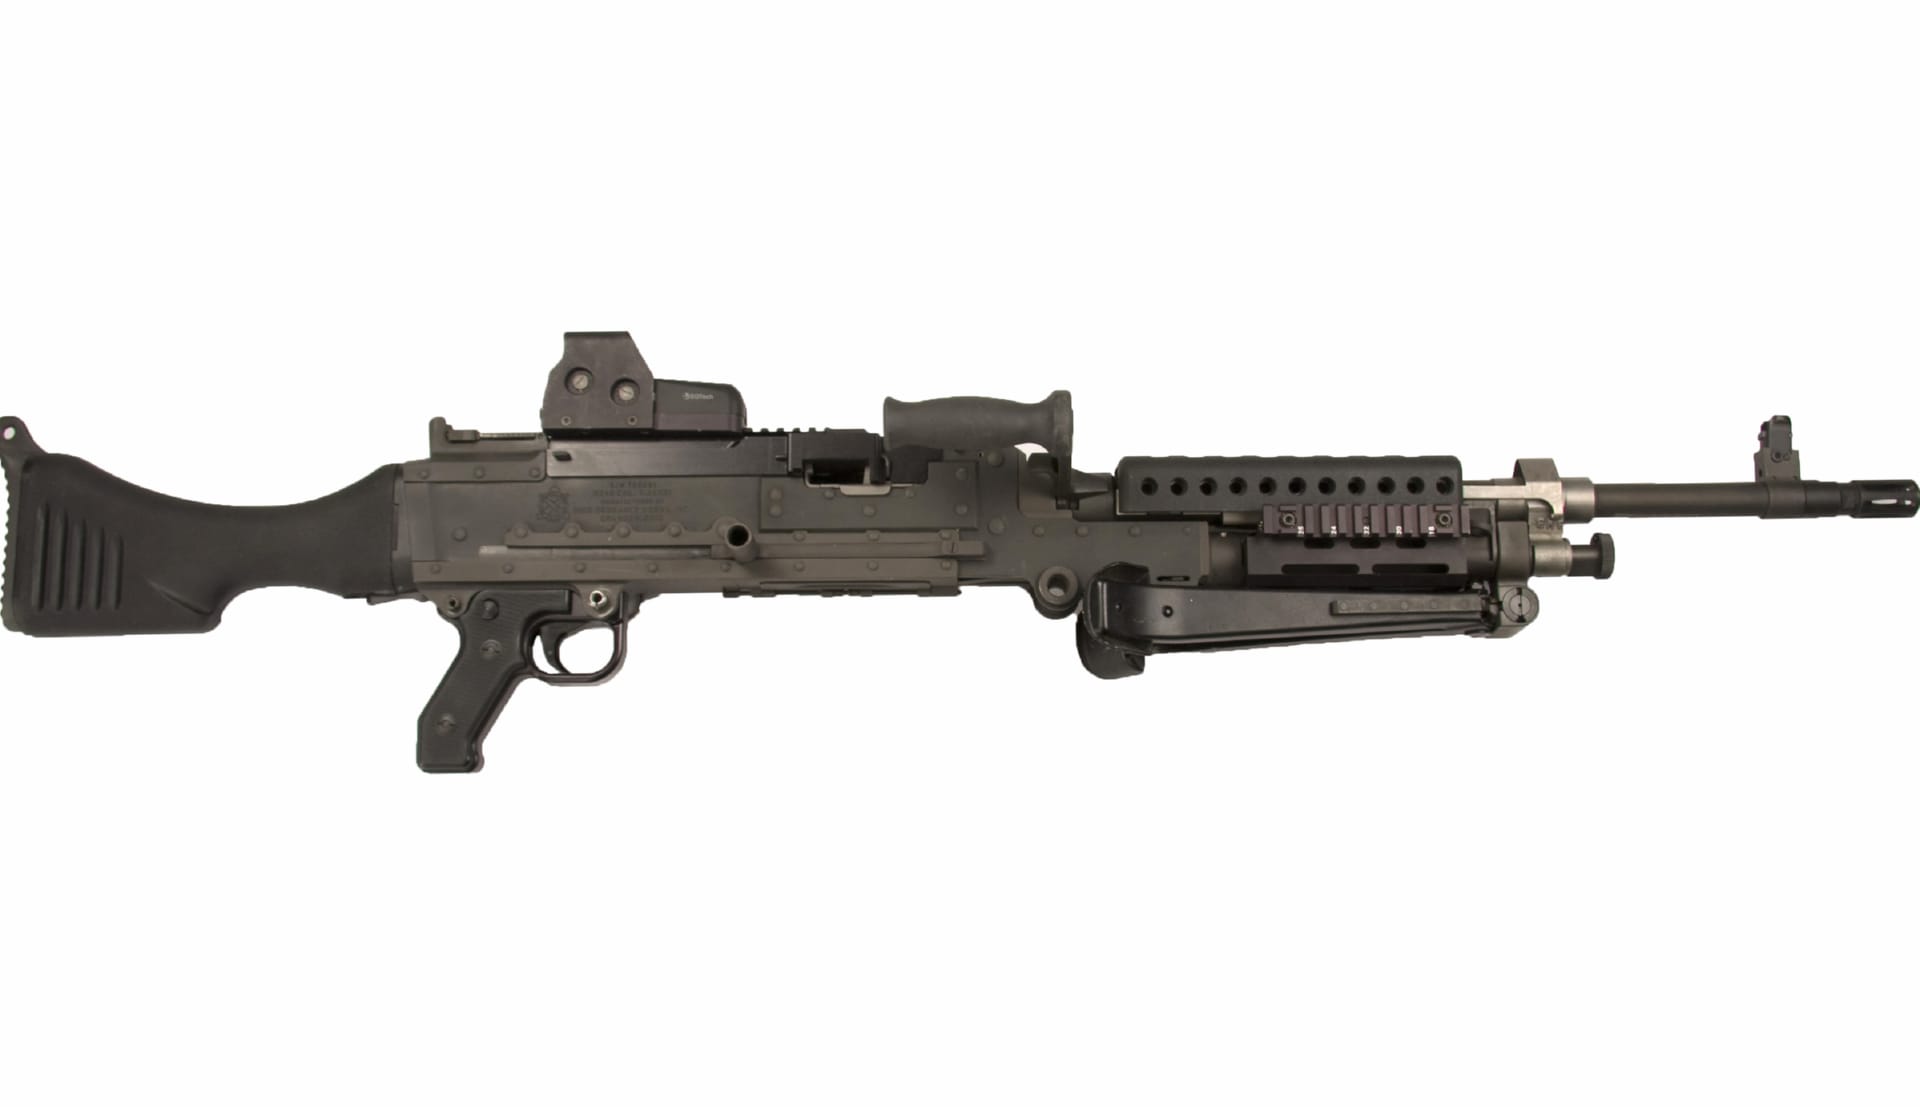 M240 machine gun at 1600 x 1200 size wallpapers HD quality